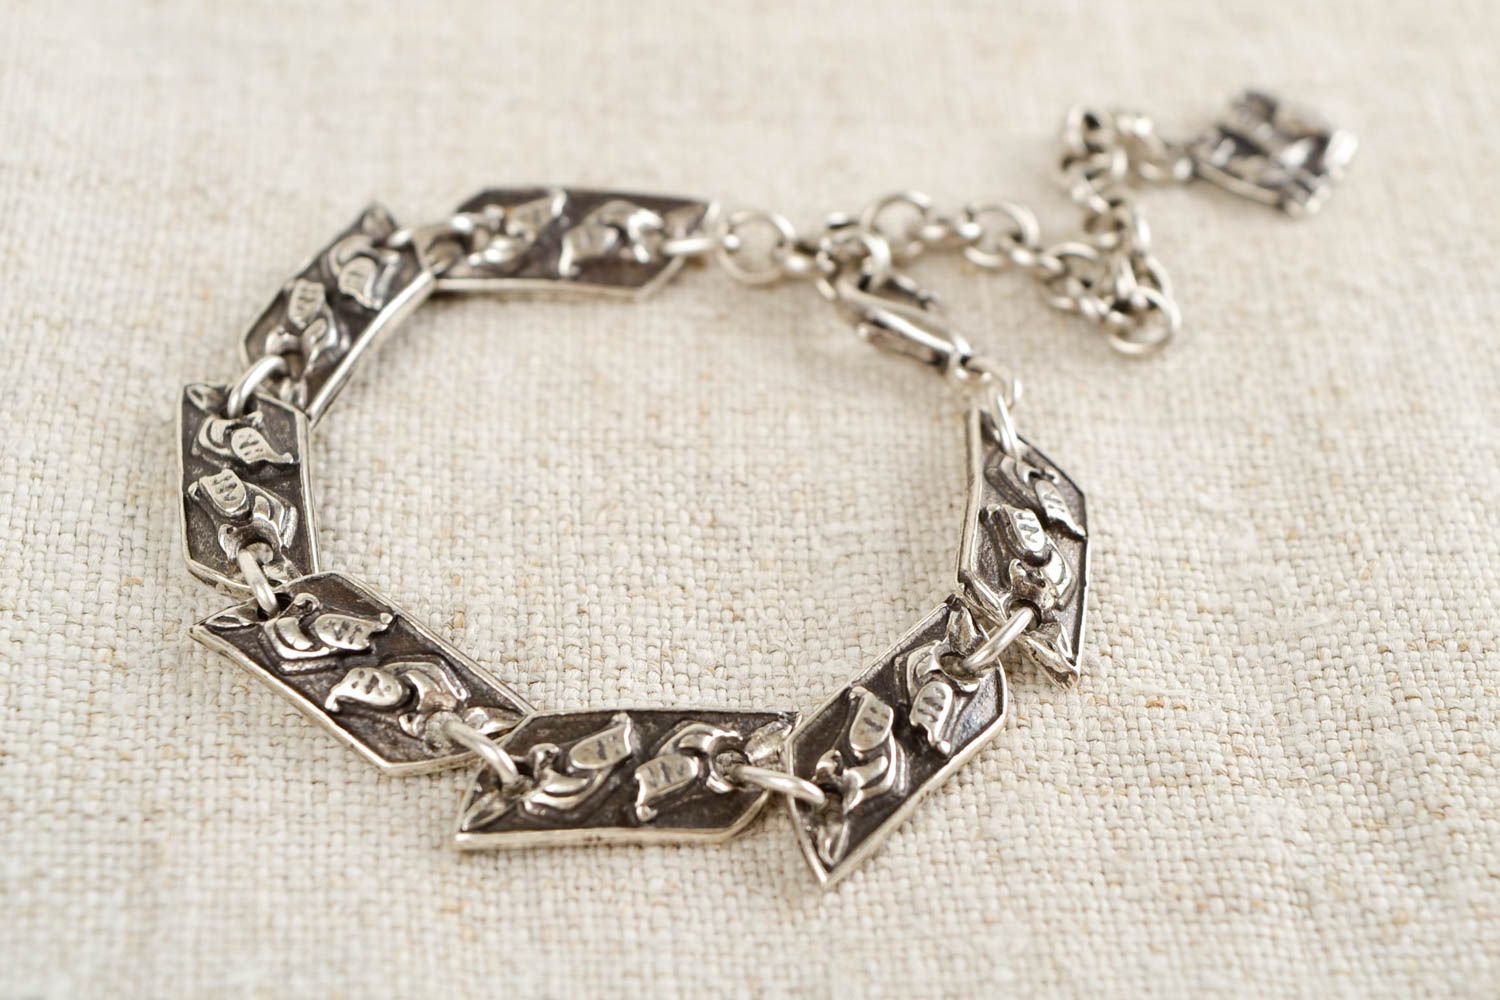 Beautiful handmade metal bracelet stylish wrist bracelet metal craft ideas photo 1